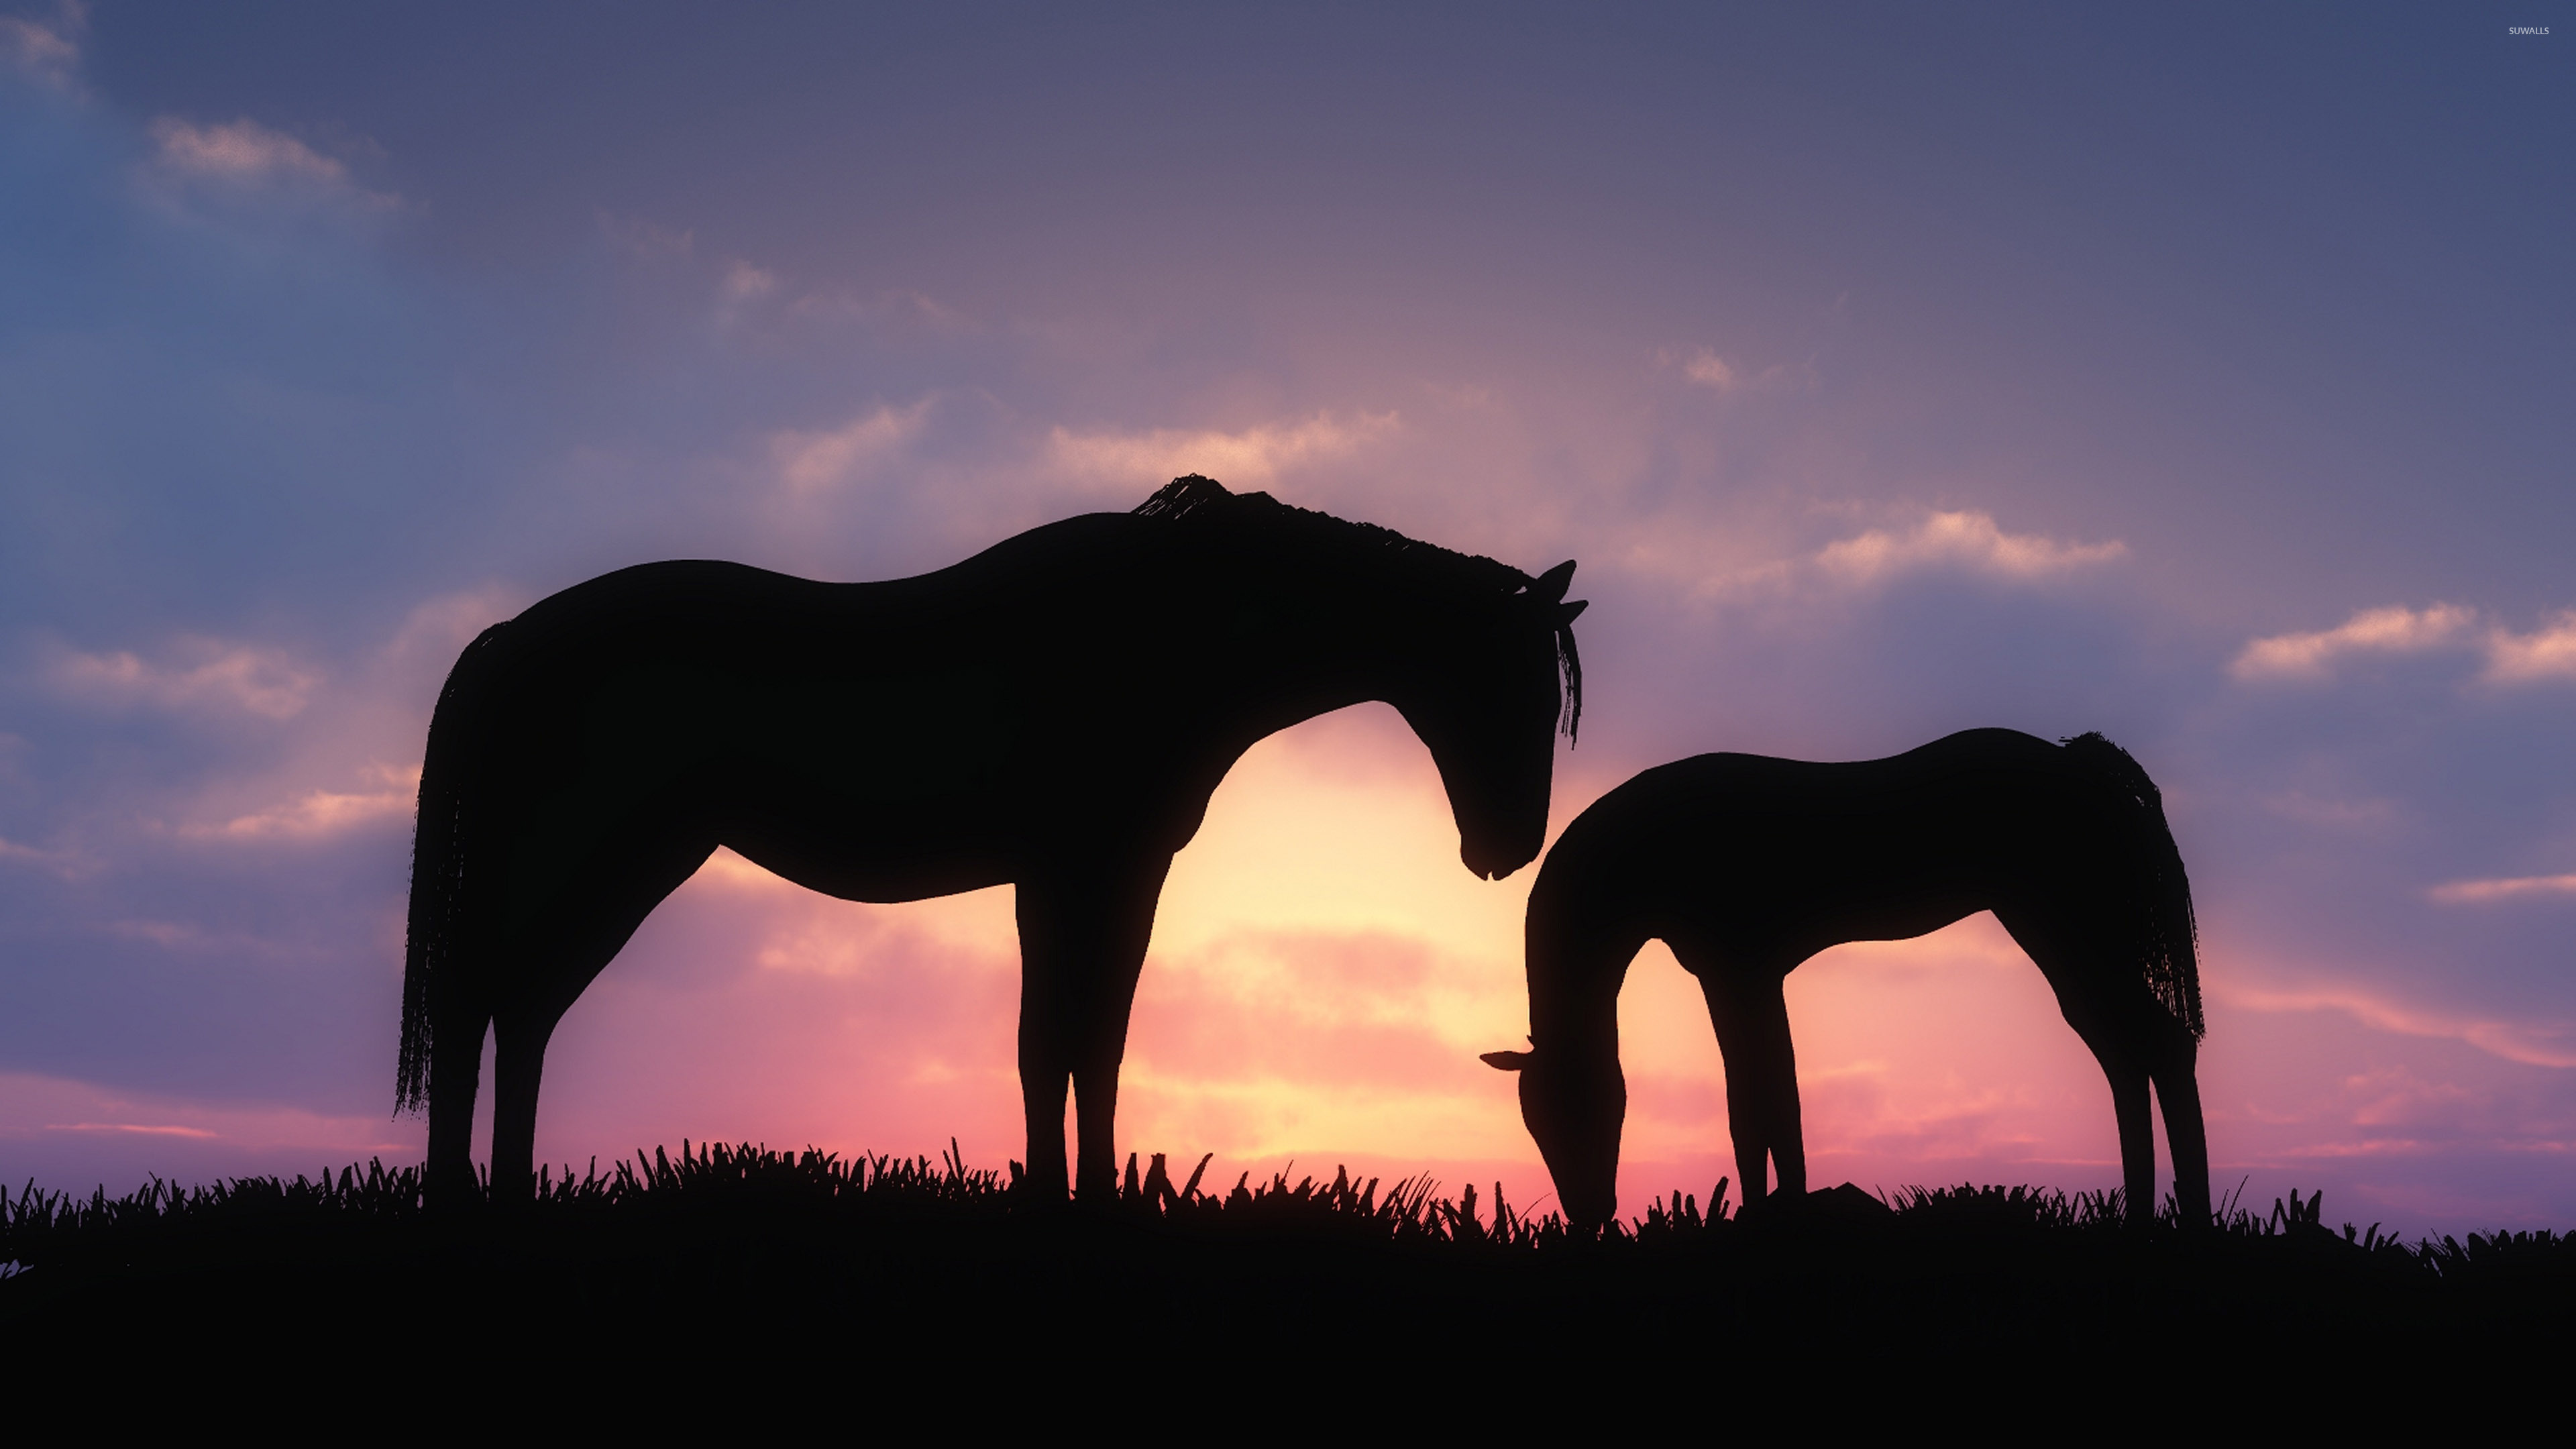 Horses In The Grass Sunset Wallpaper Animal